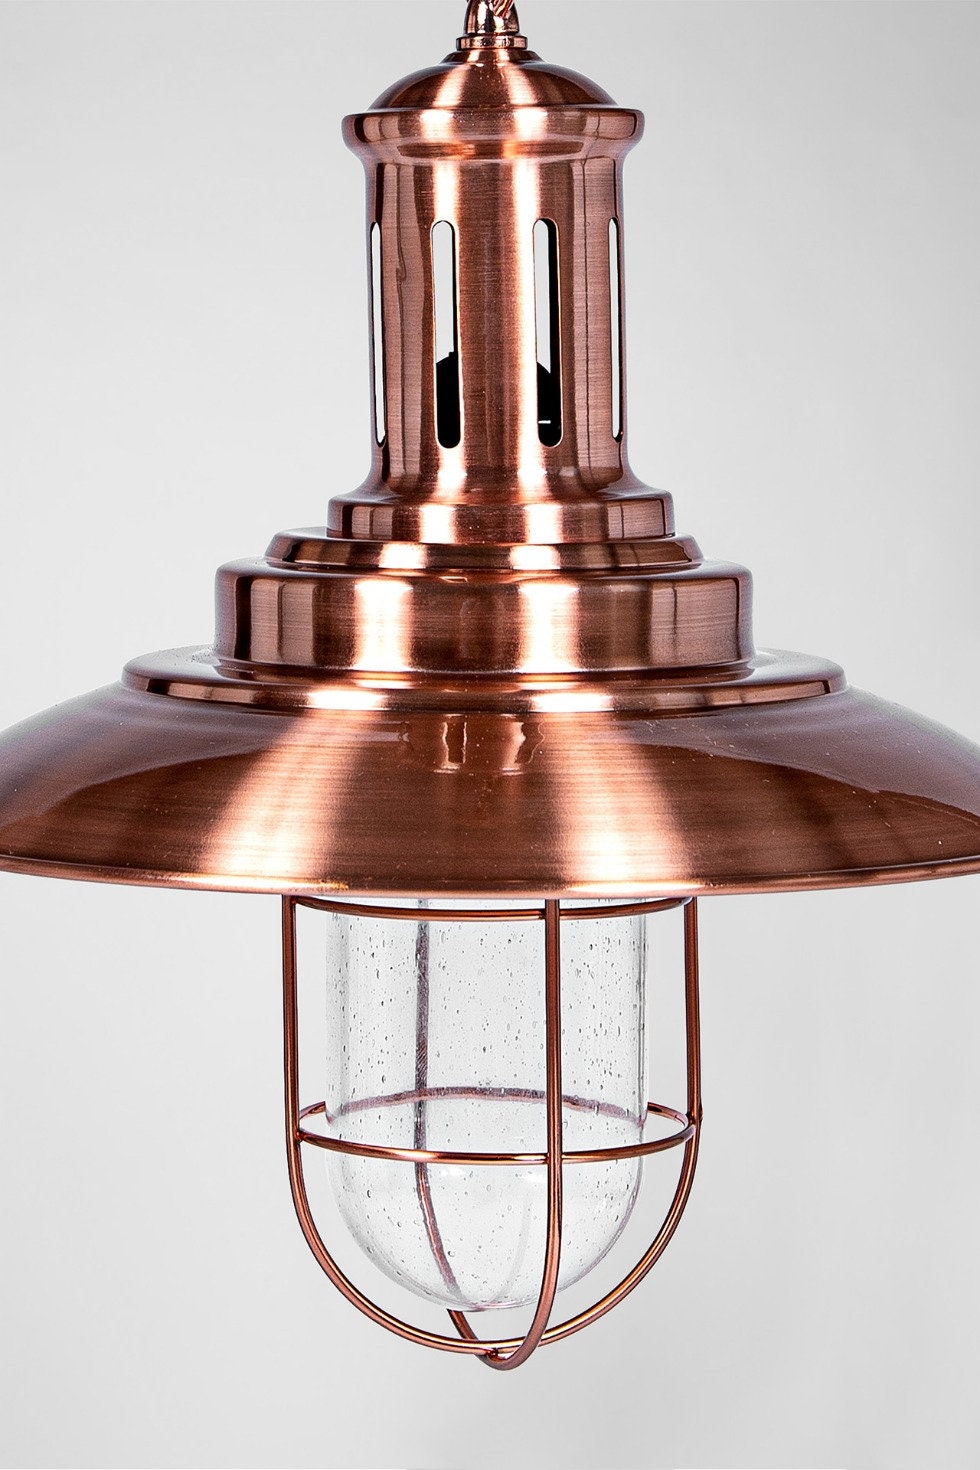 Mrs. Copper Satin - Retro Vintage Industrial Design Copper Metal Pendant Lamp